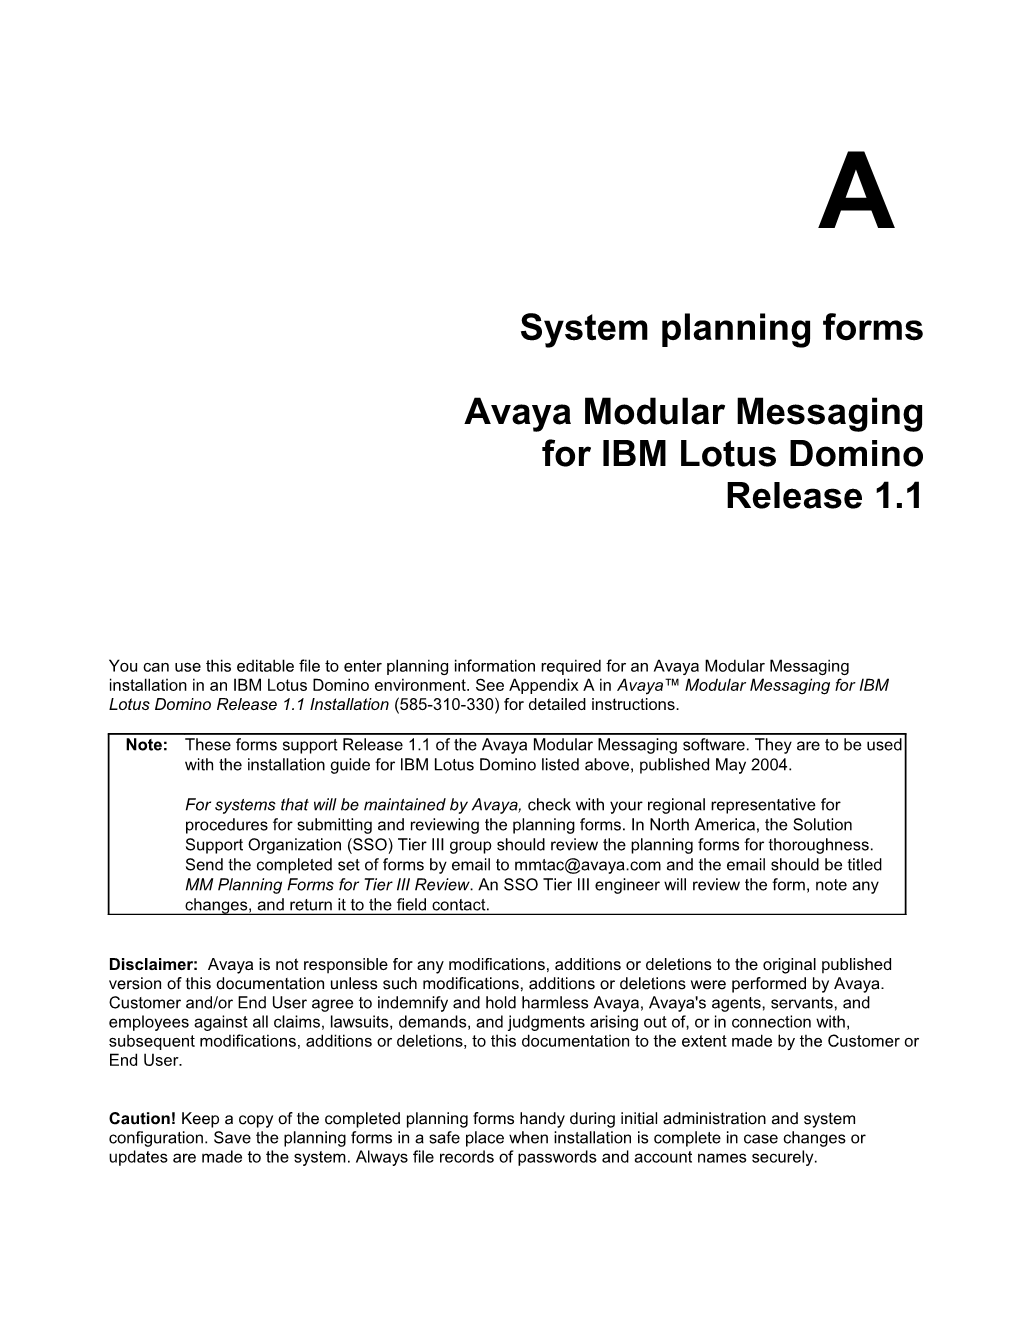 Avaya Modular Messaging Release 1.1 Planning Forms for IBM Lotus Domino - 1